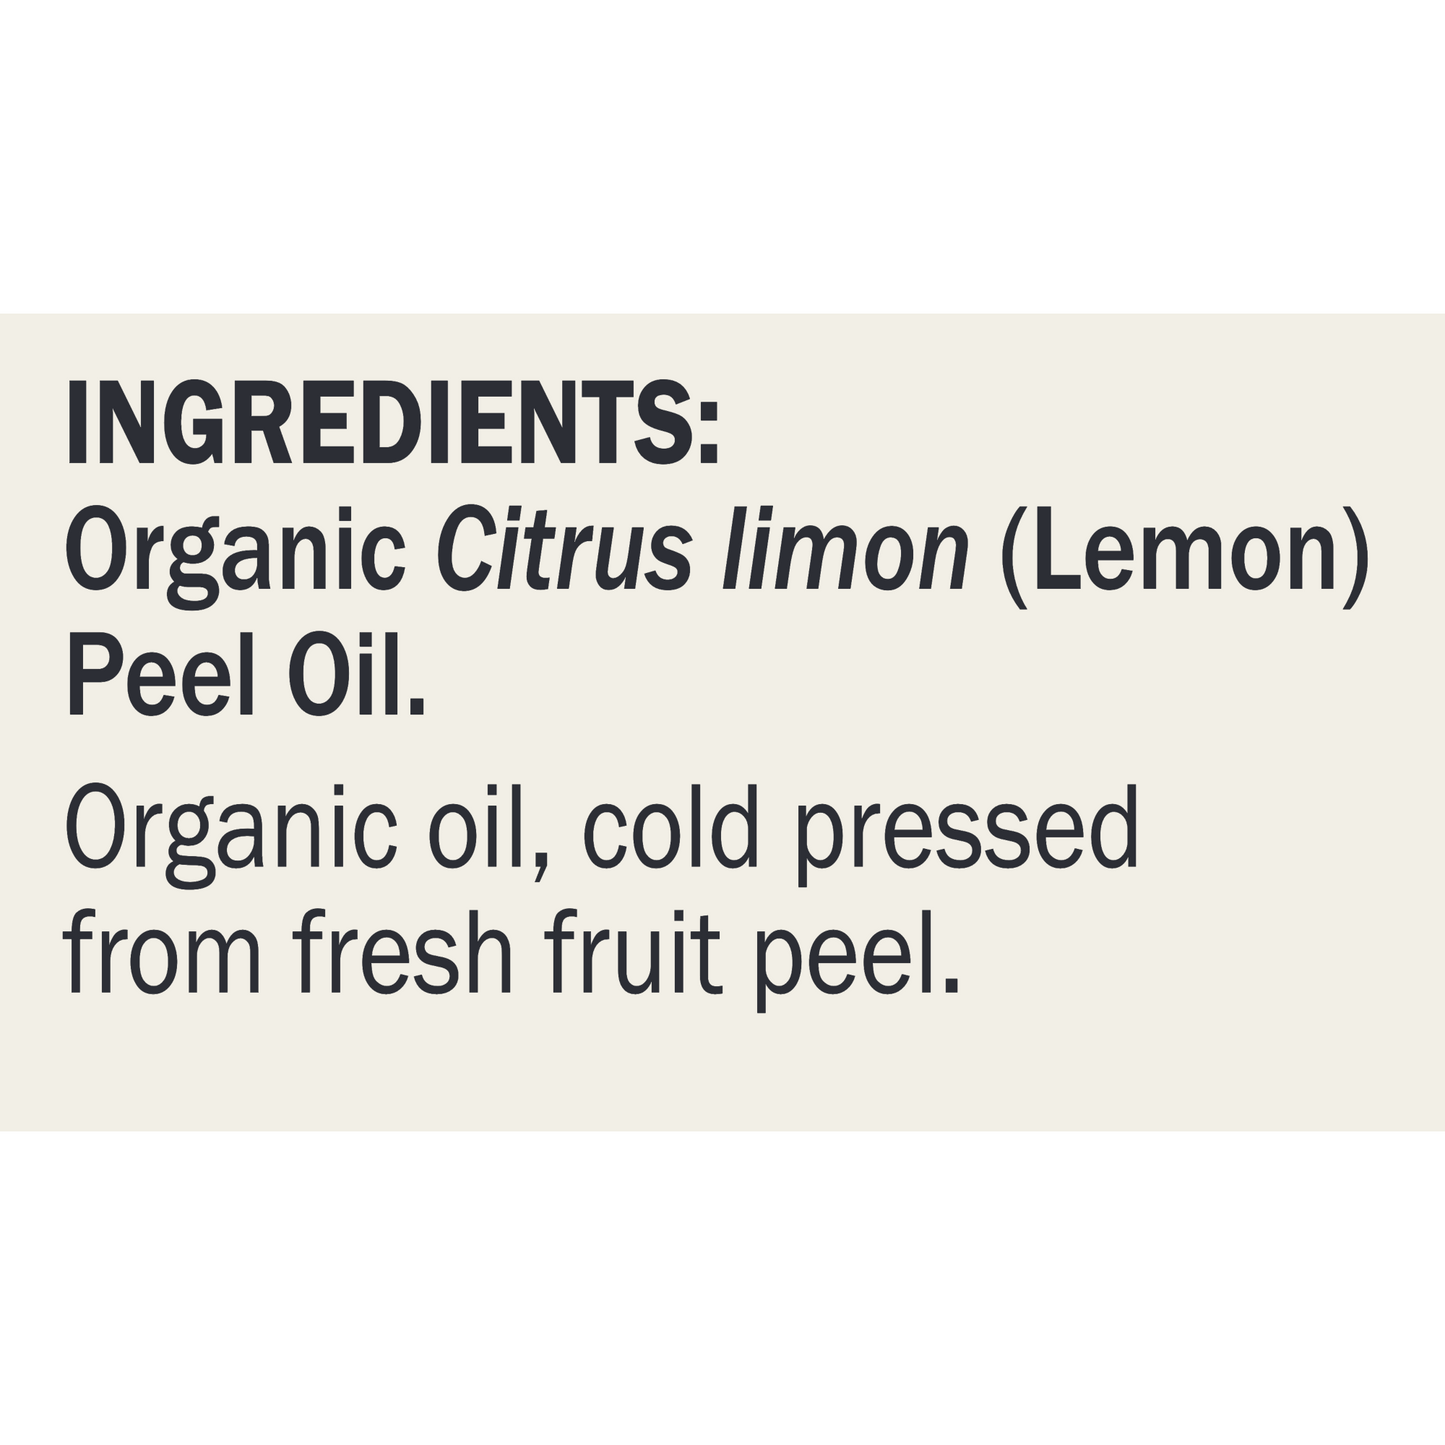 Dr. Mercola Organic Lemon Essential Oil